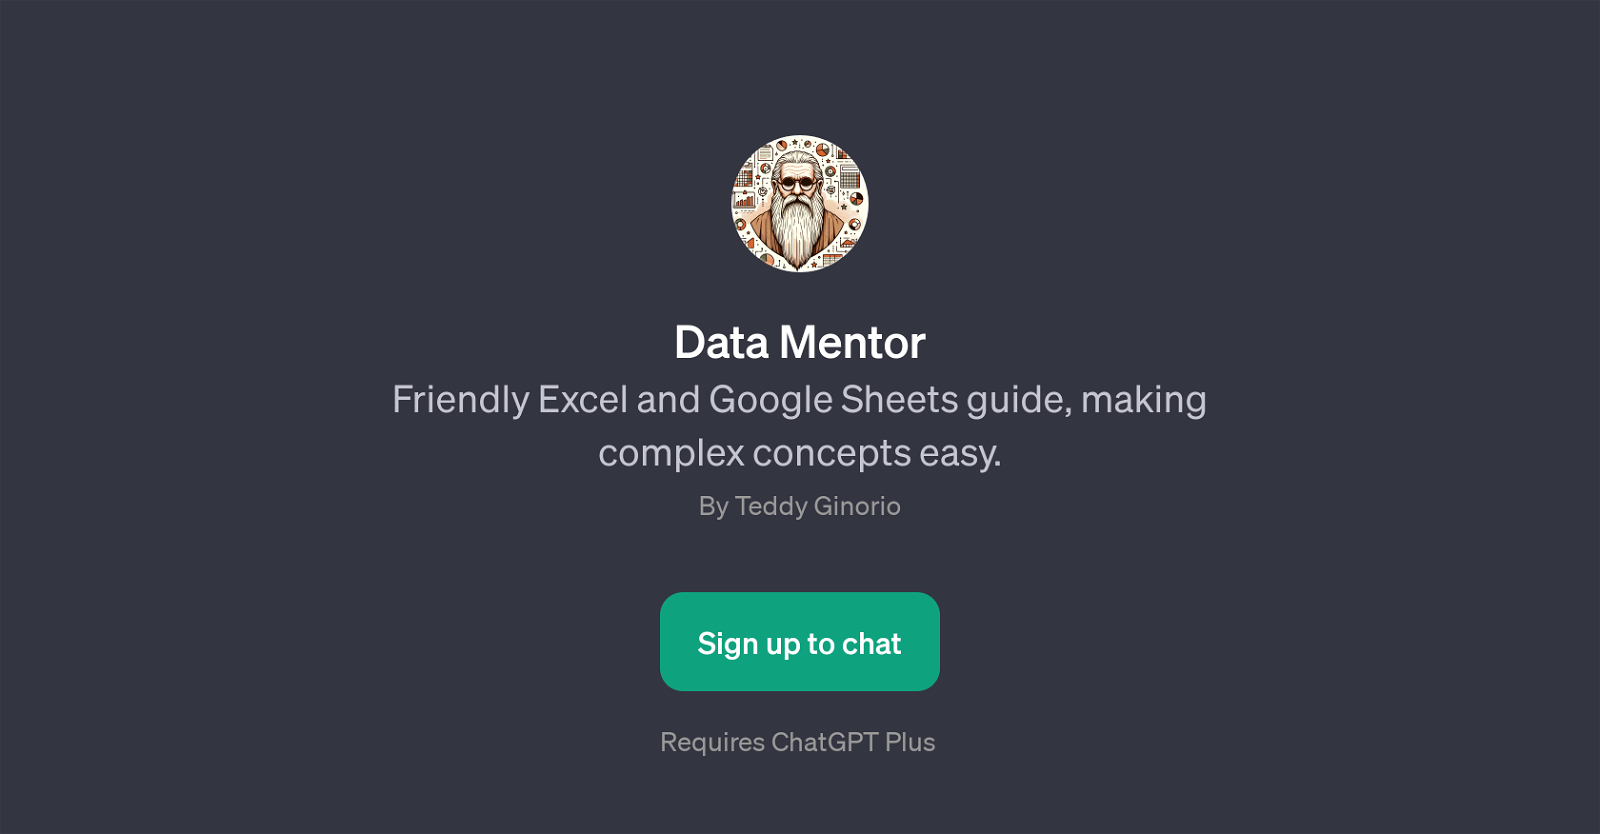 Data Mentor website